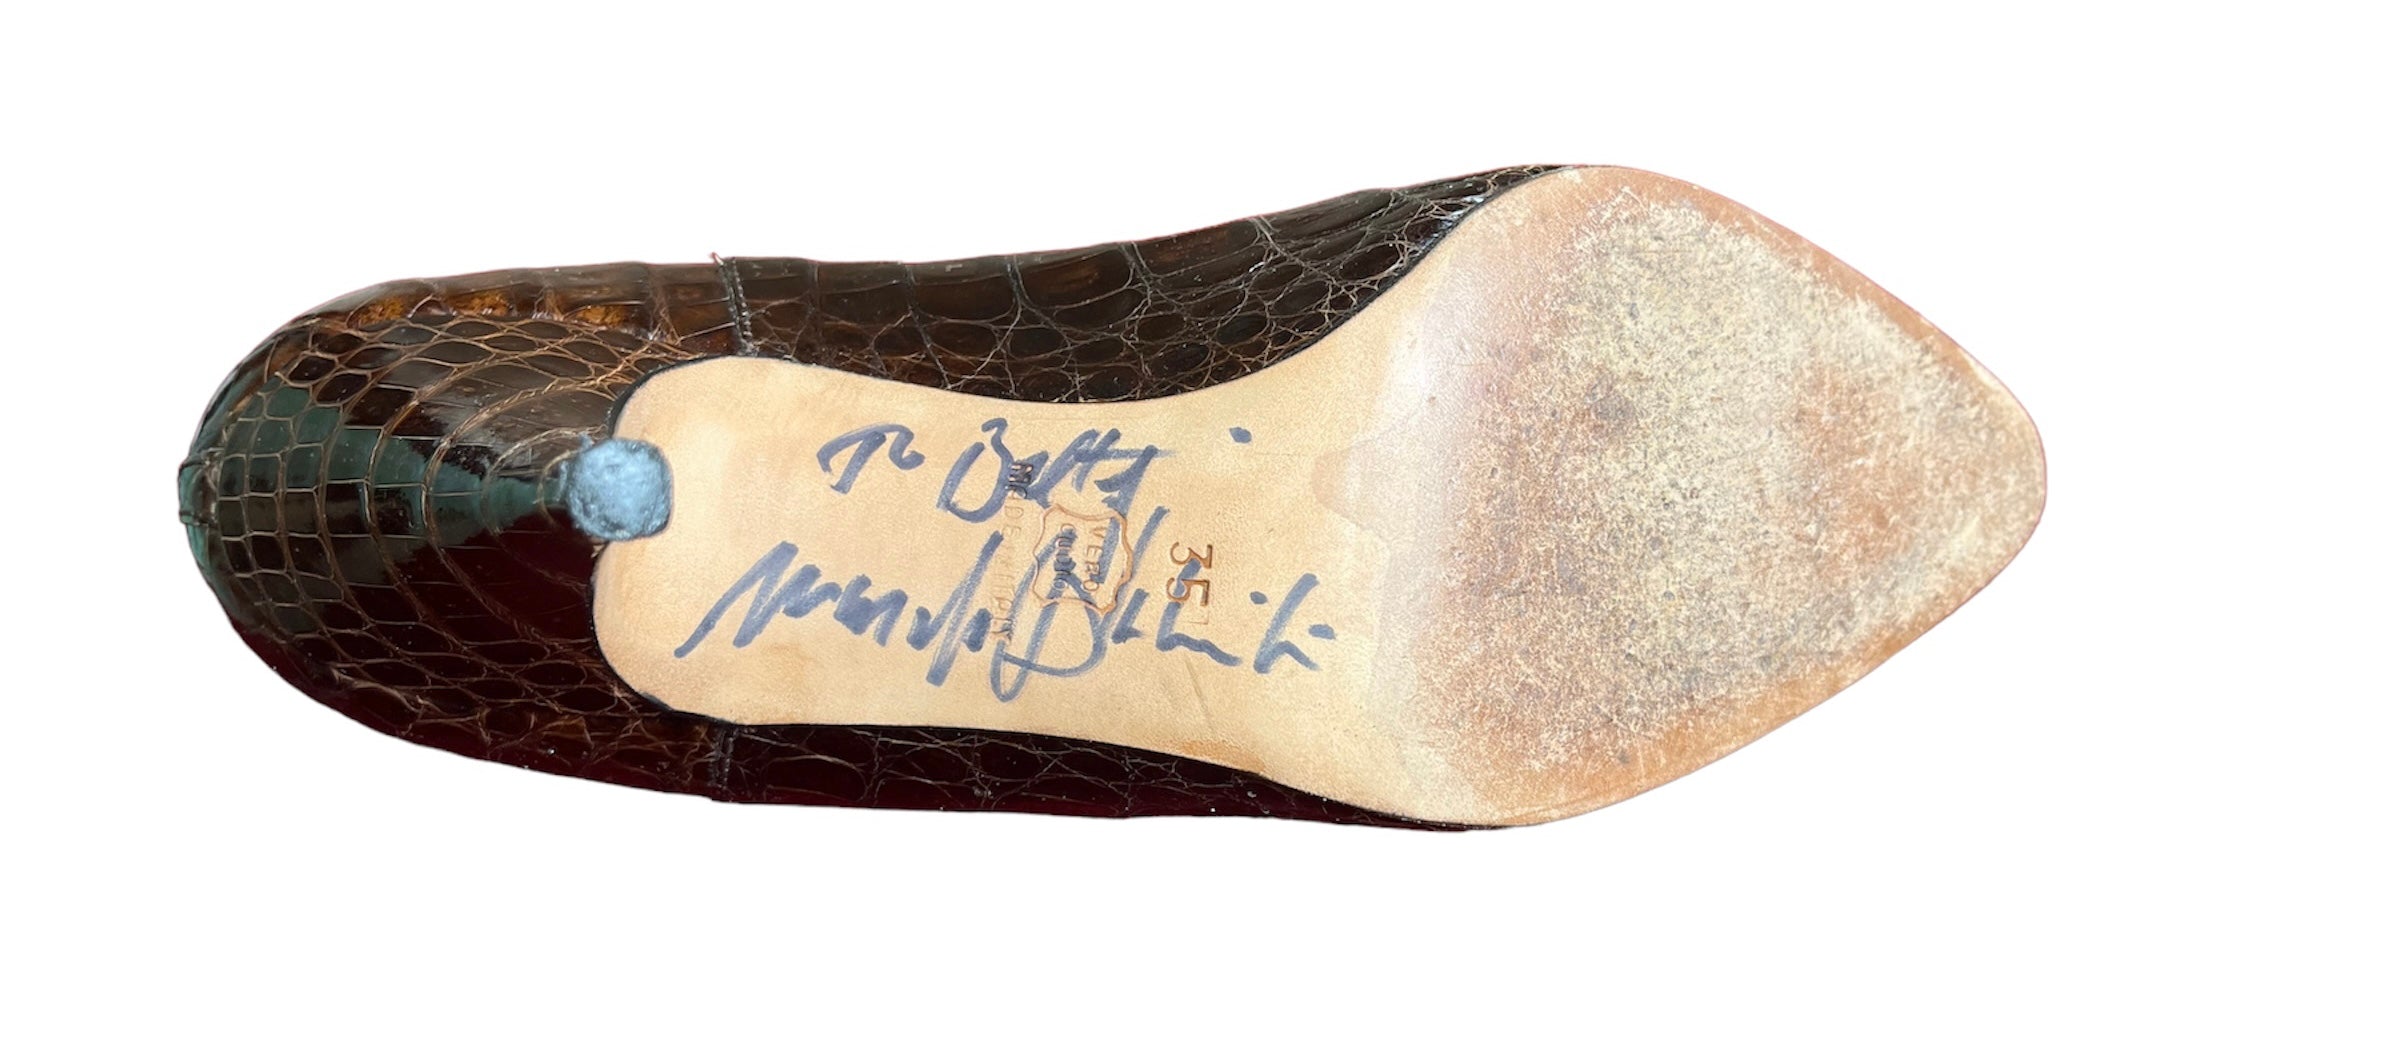 PRICE Autographed Manolo Blahnik Crocodile Leather Pumps AUTOGRAPH LEFT SHOE READS TO BETTY MANOLO BLAHNIK 2 OF 6